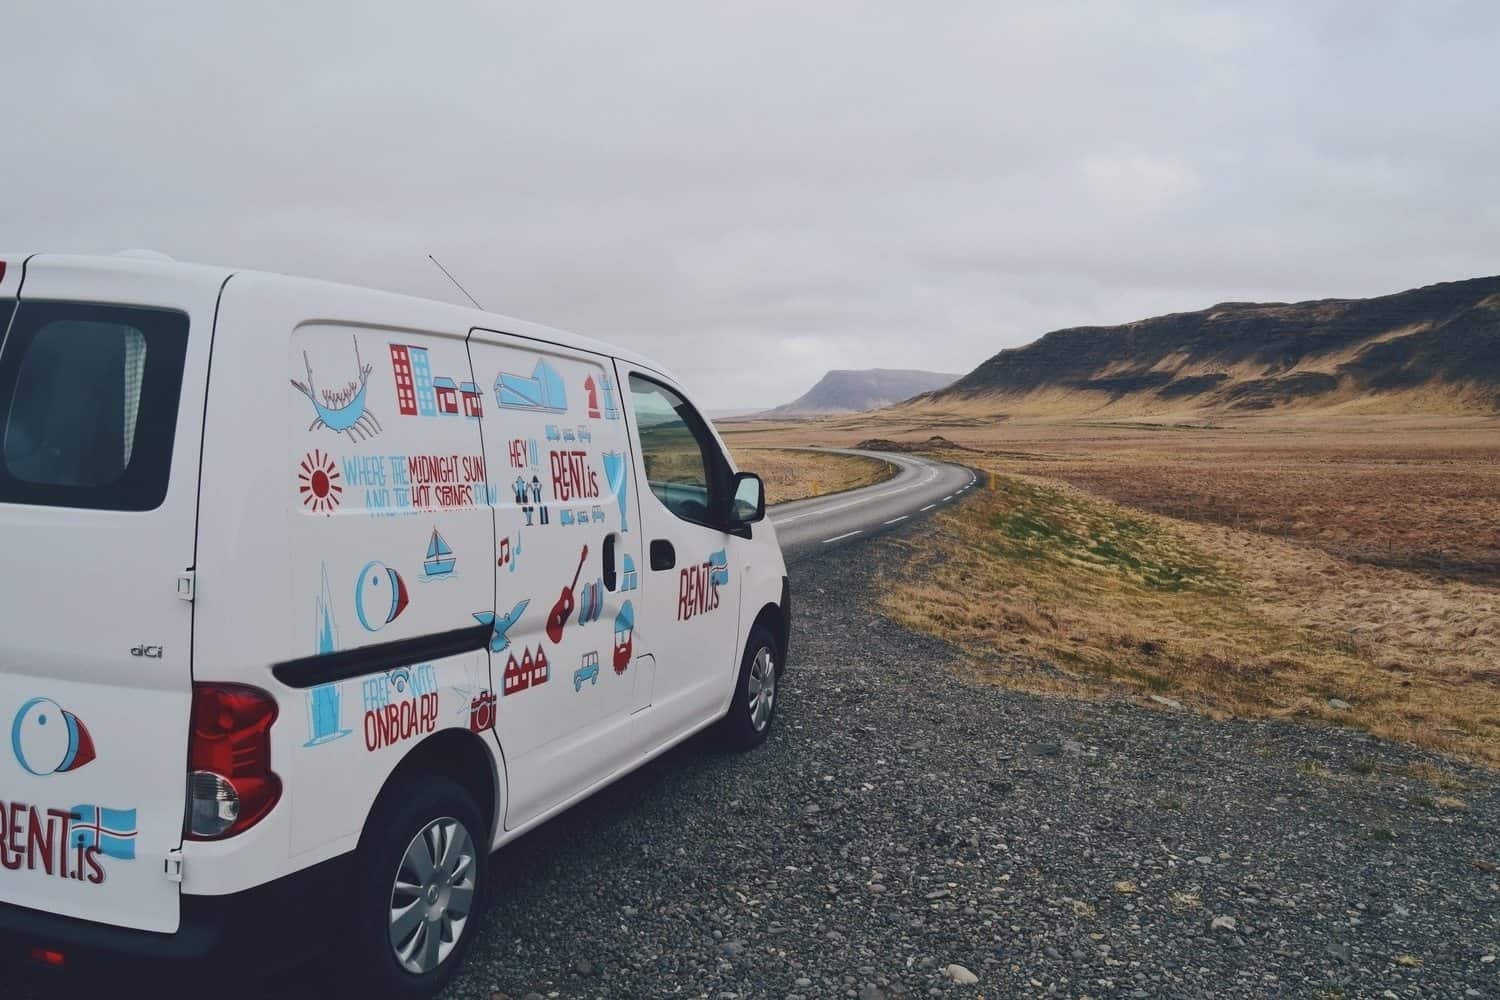 Camper van rental in Iceland from Rent.is